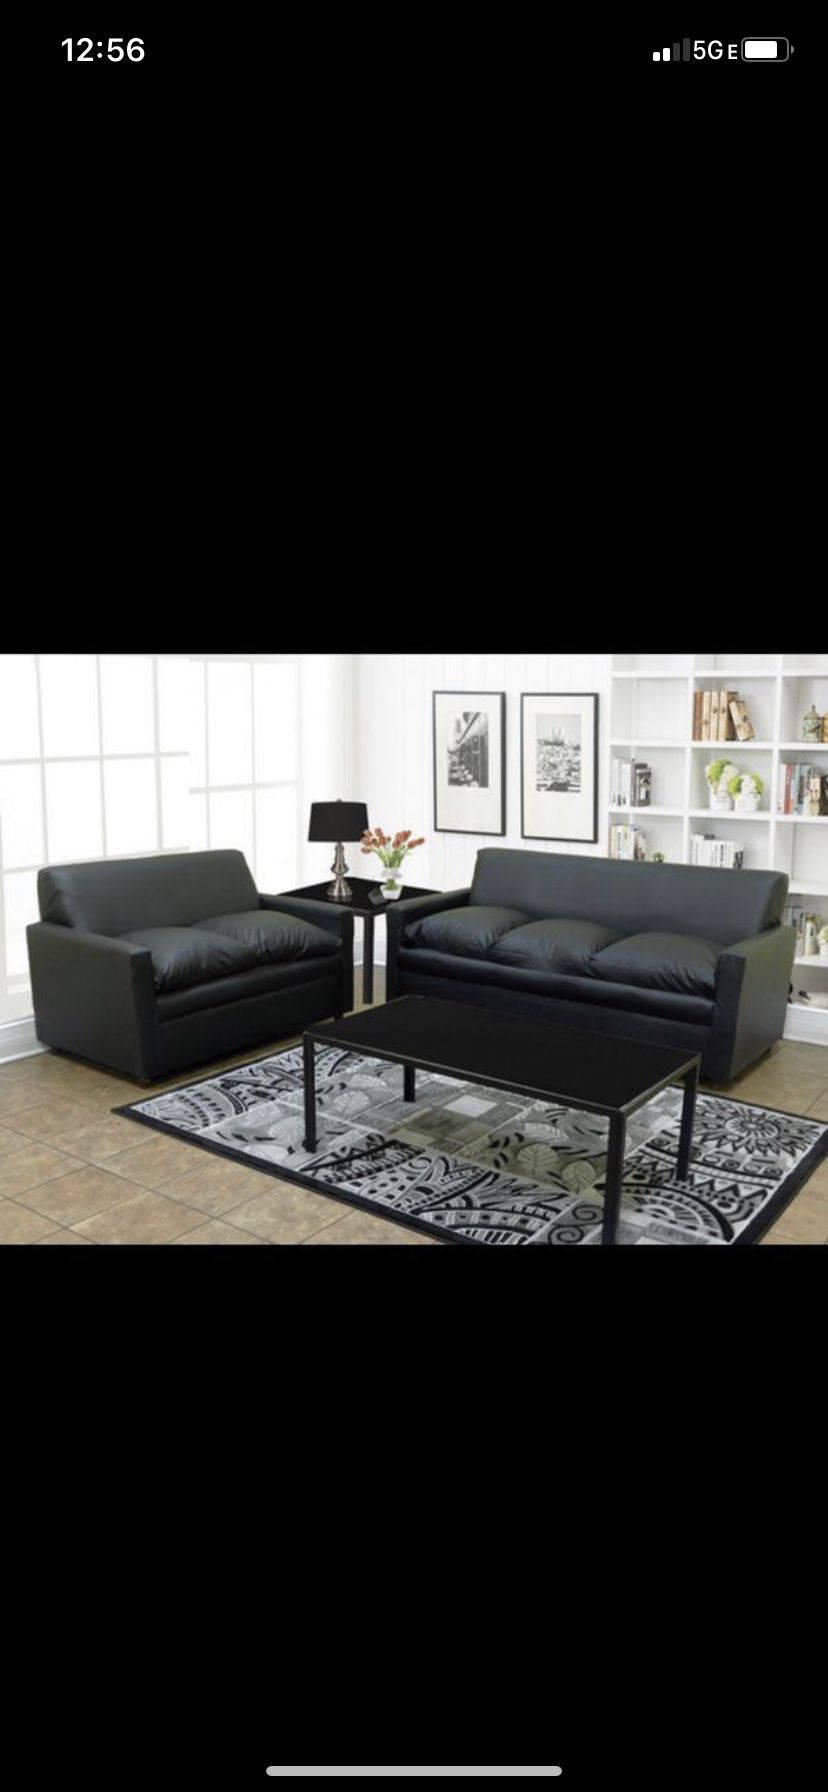 Brand new 2 pc living room - sofa + loveseat